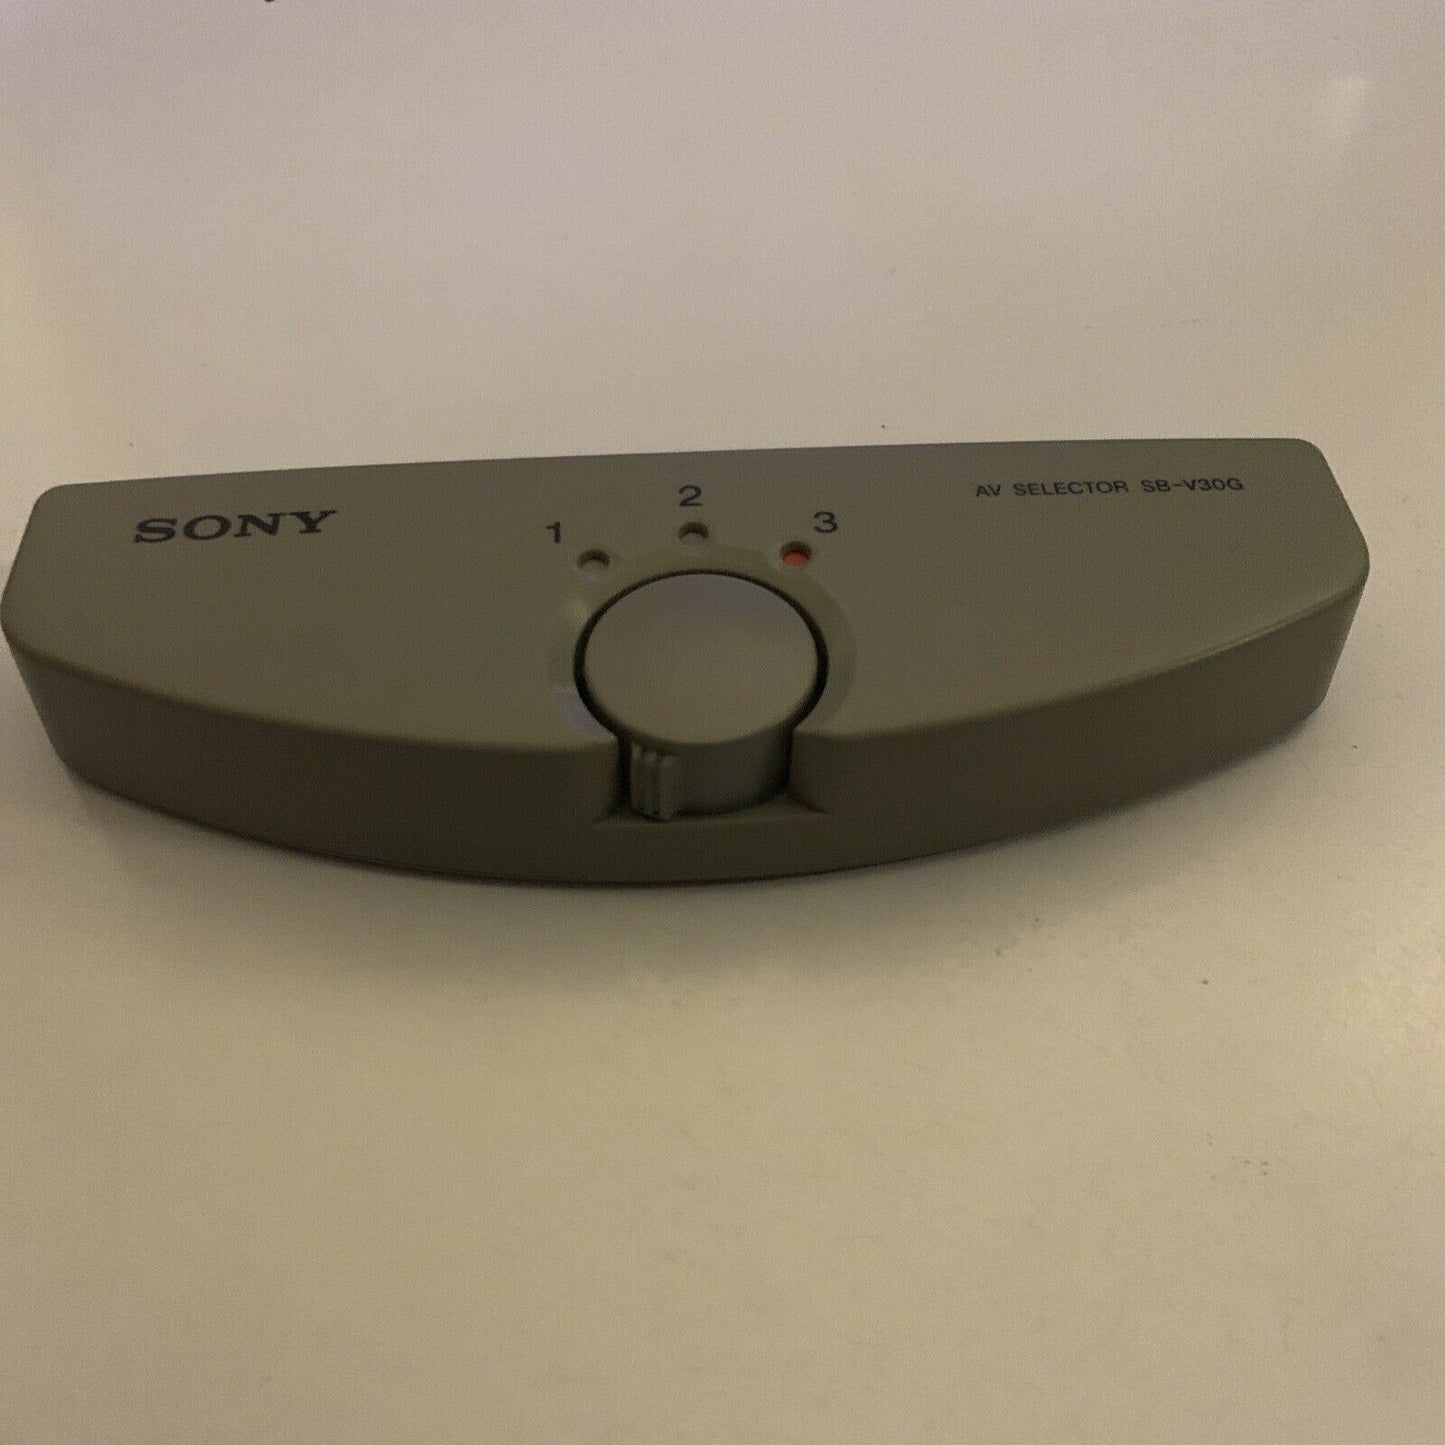 Official Sony AV Selector SB-V30G RCA Composite Cable